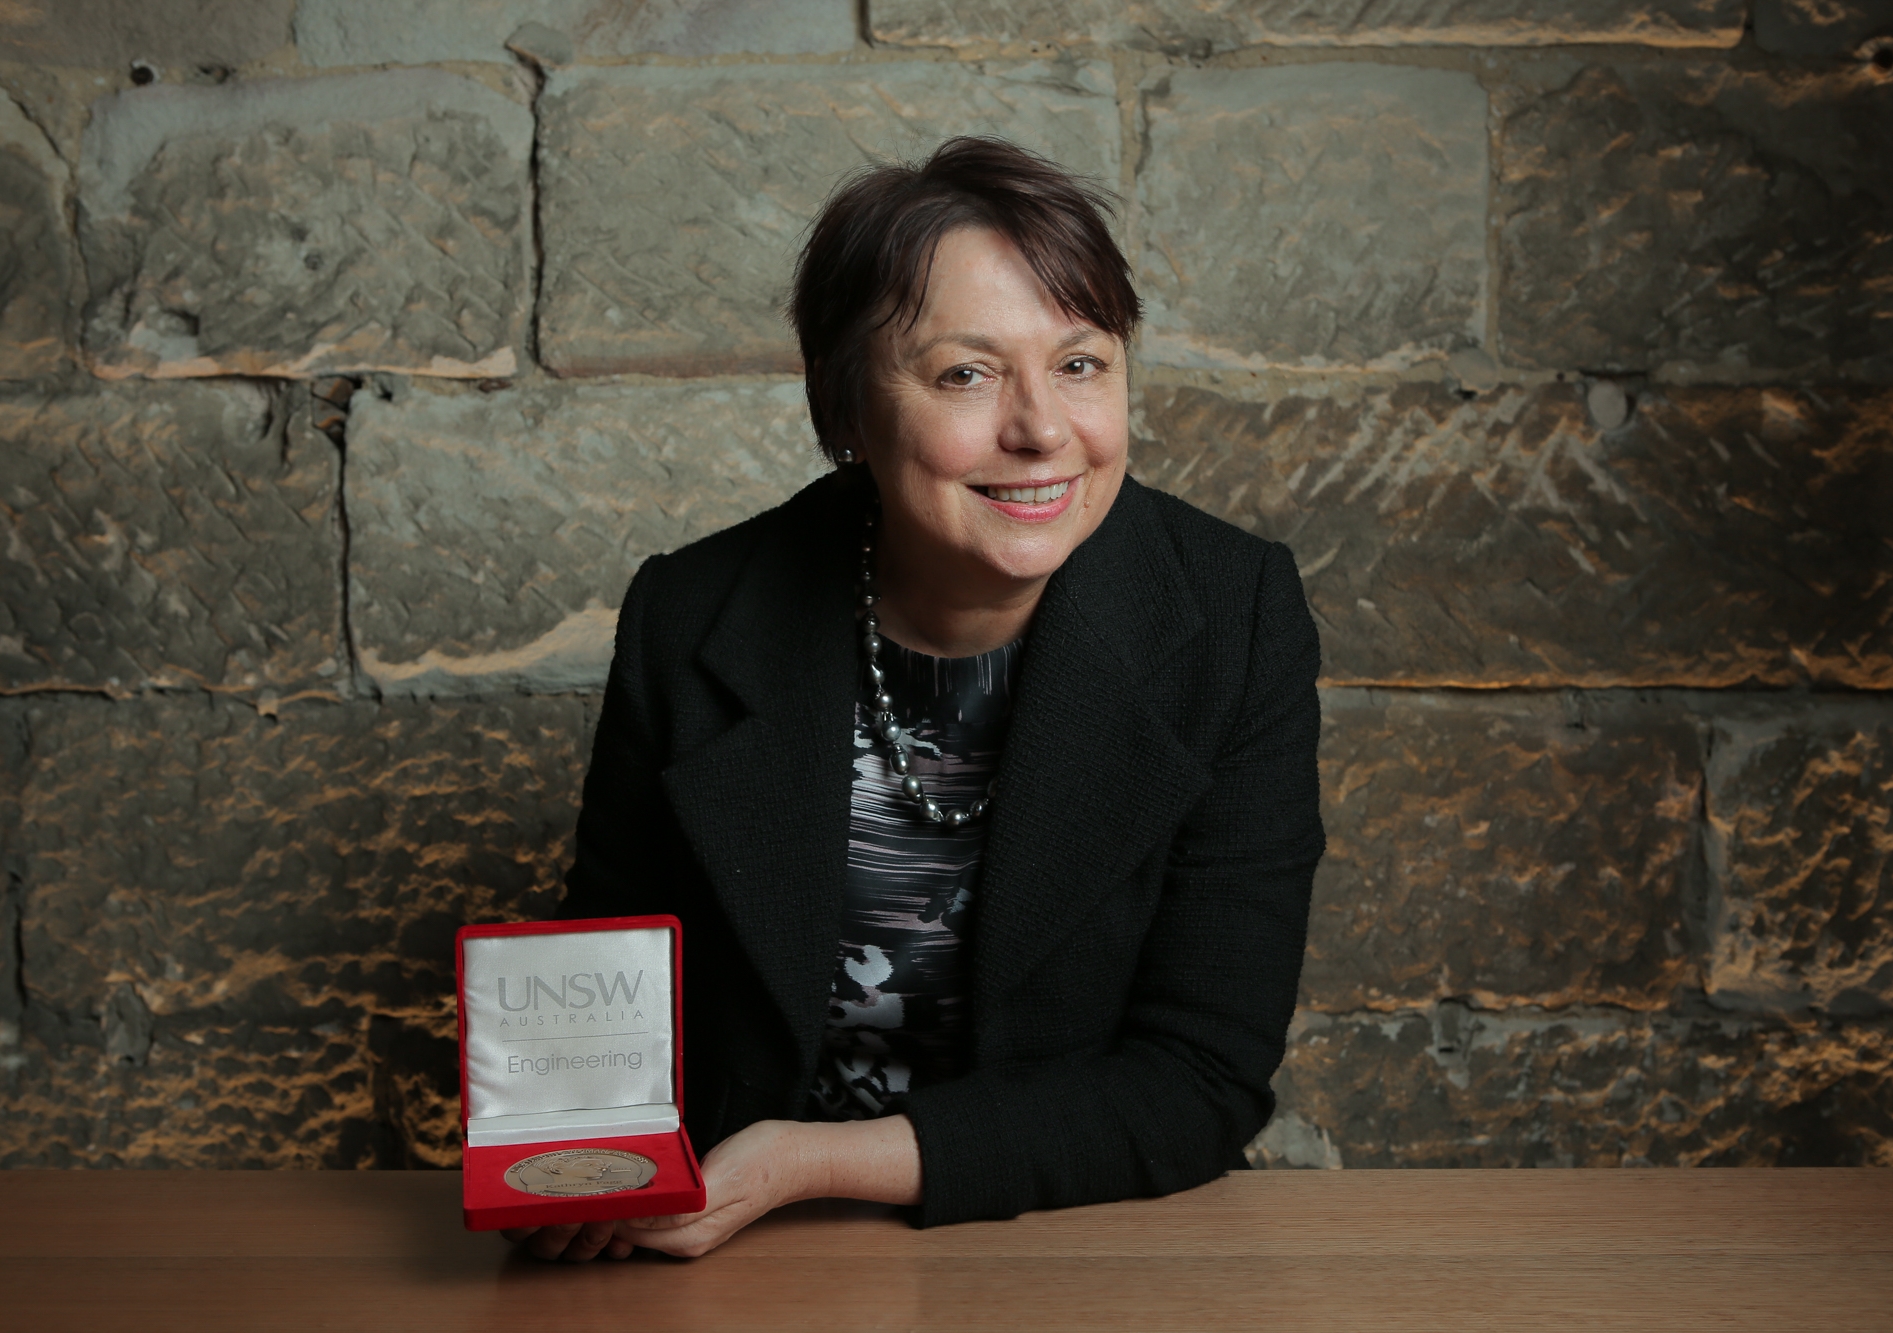 Kathryn Fagg, winner of the 2017 Ada Lovelace Medal for Outstanding Woman Engineer. Photo: Maja Baska/UNSW